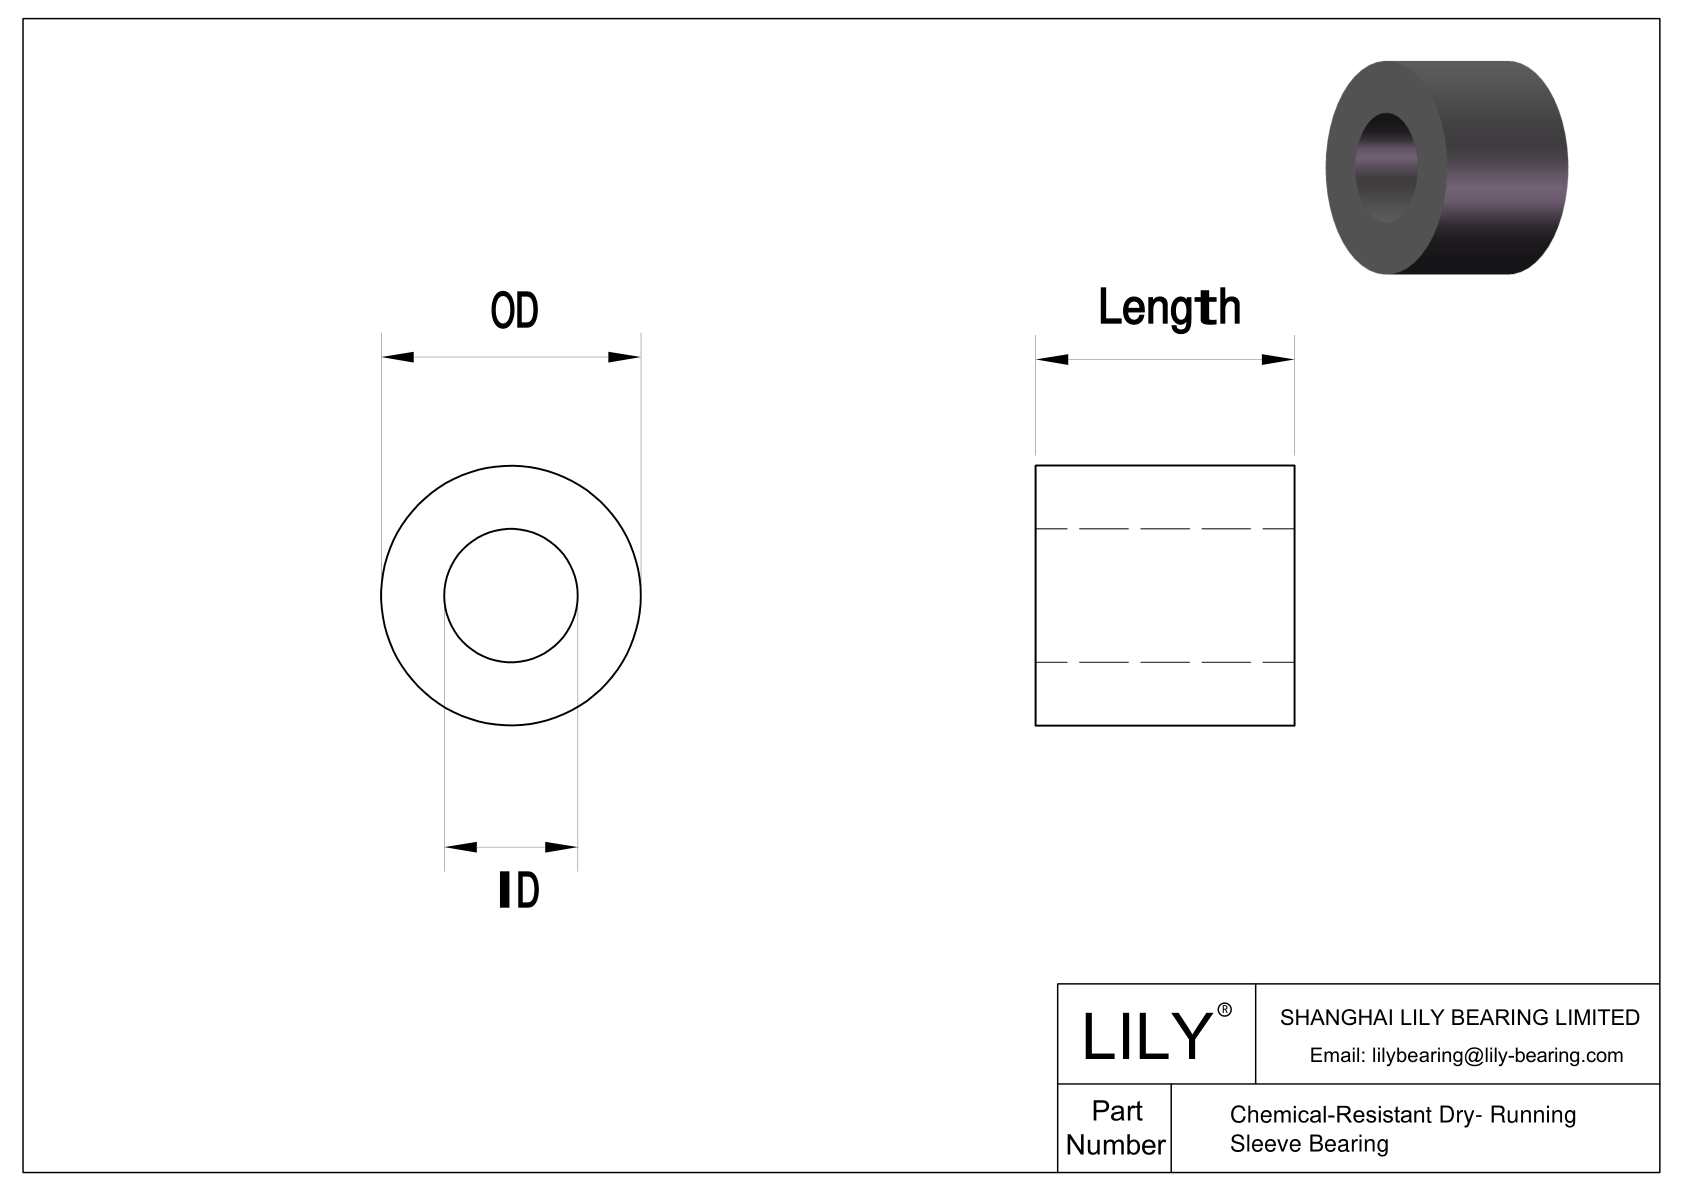 6621K114 Chemical-Resistant Dry-Running Sleeve Bearings cad drawing